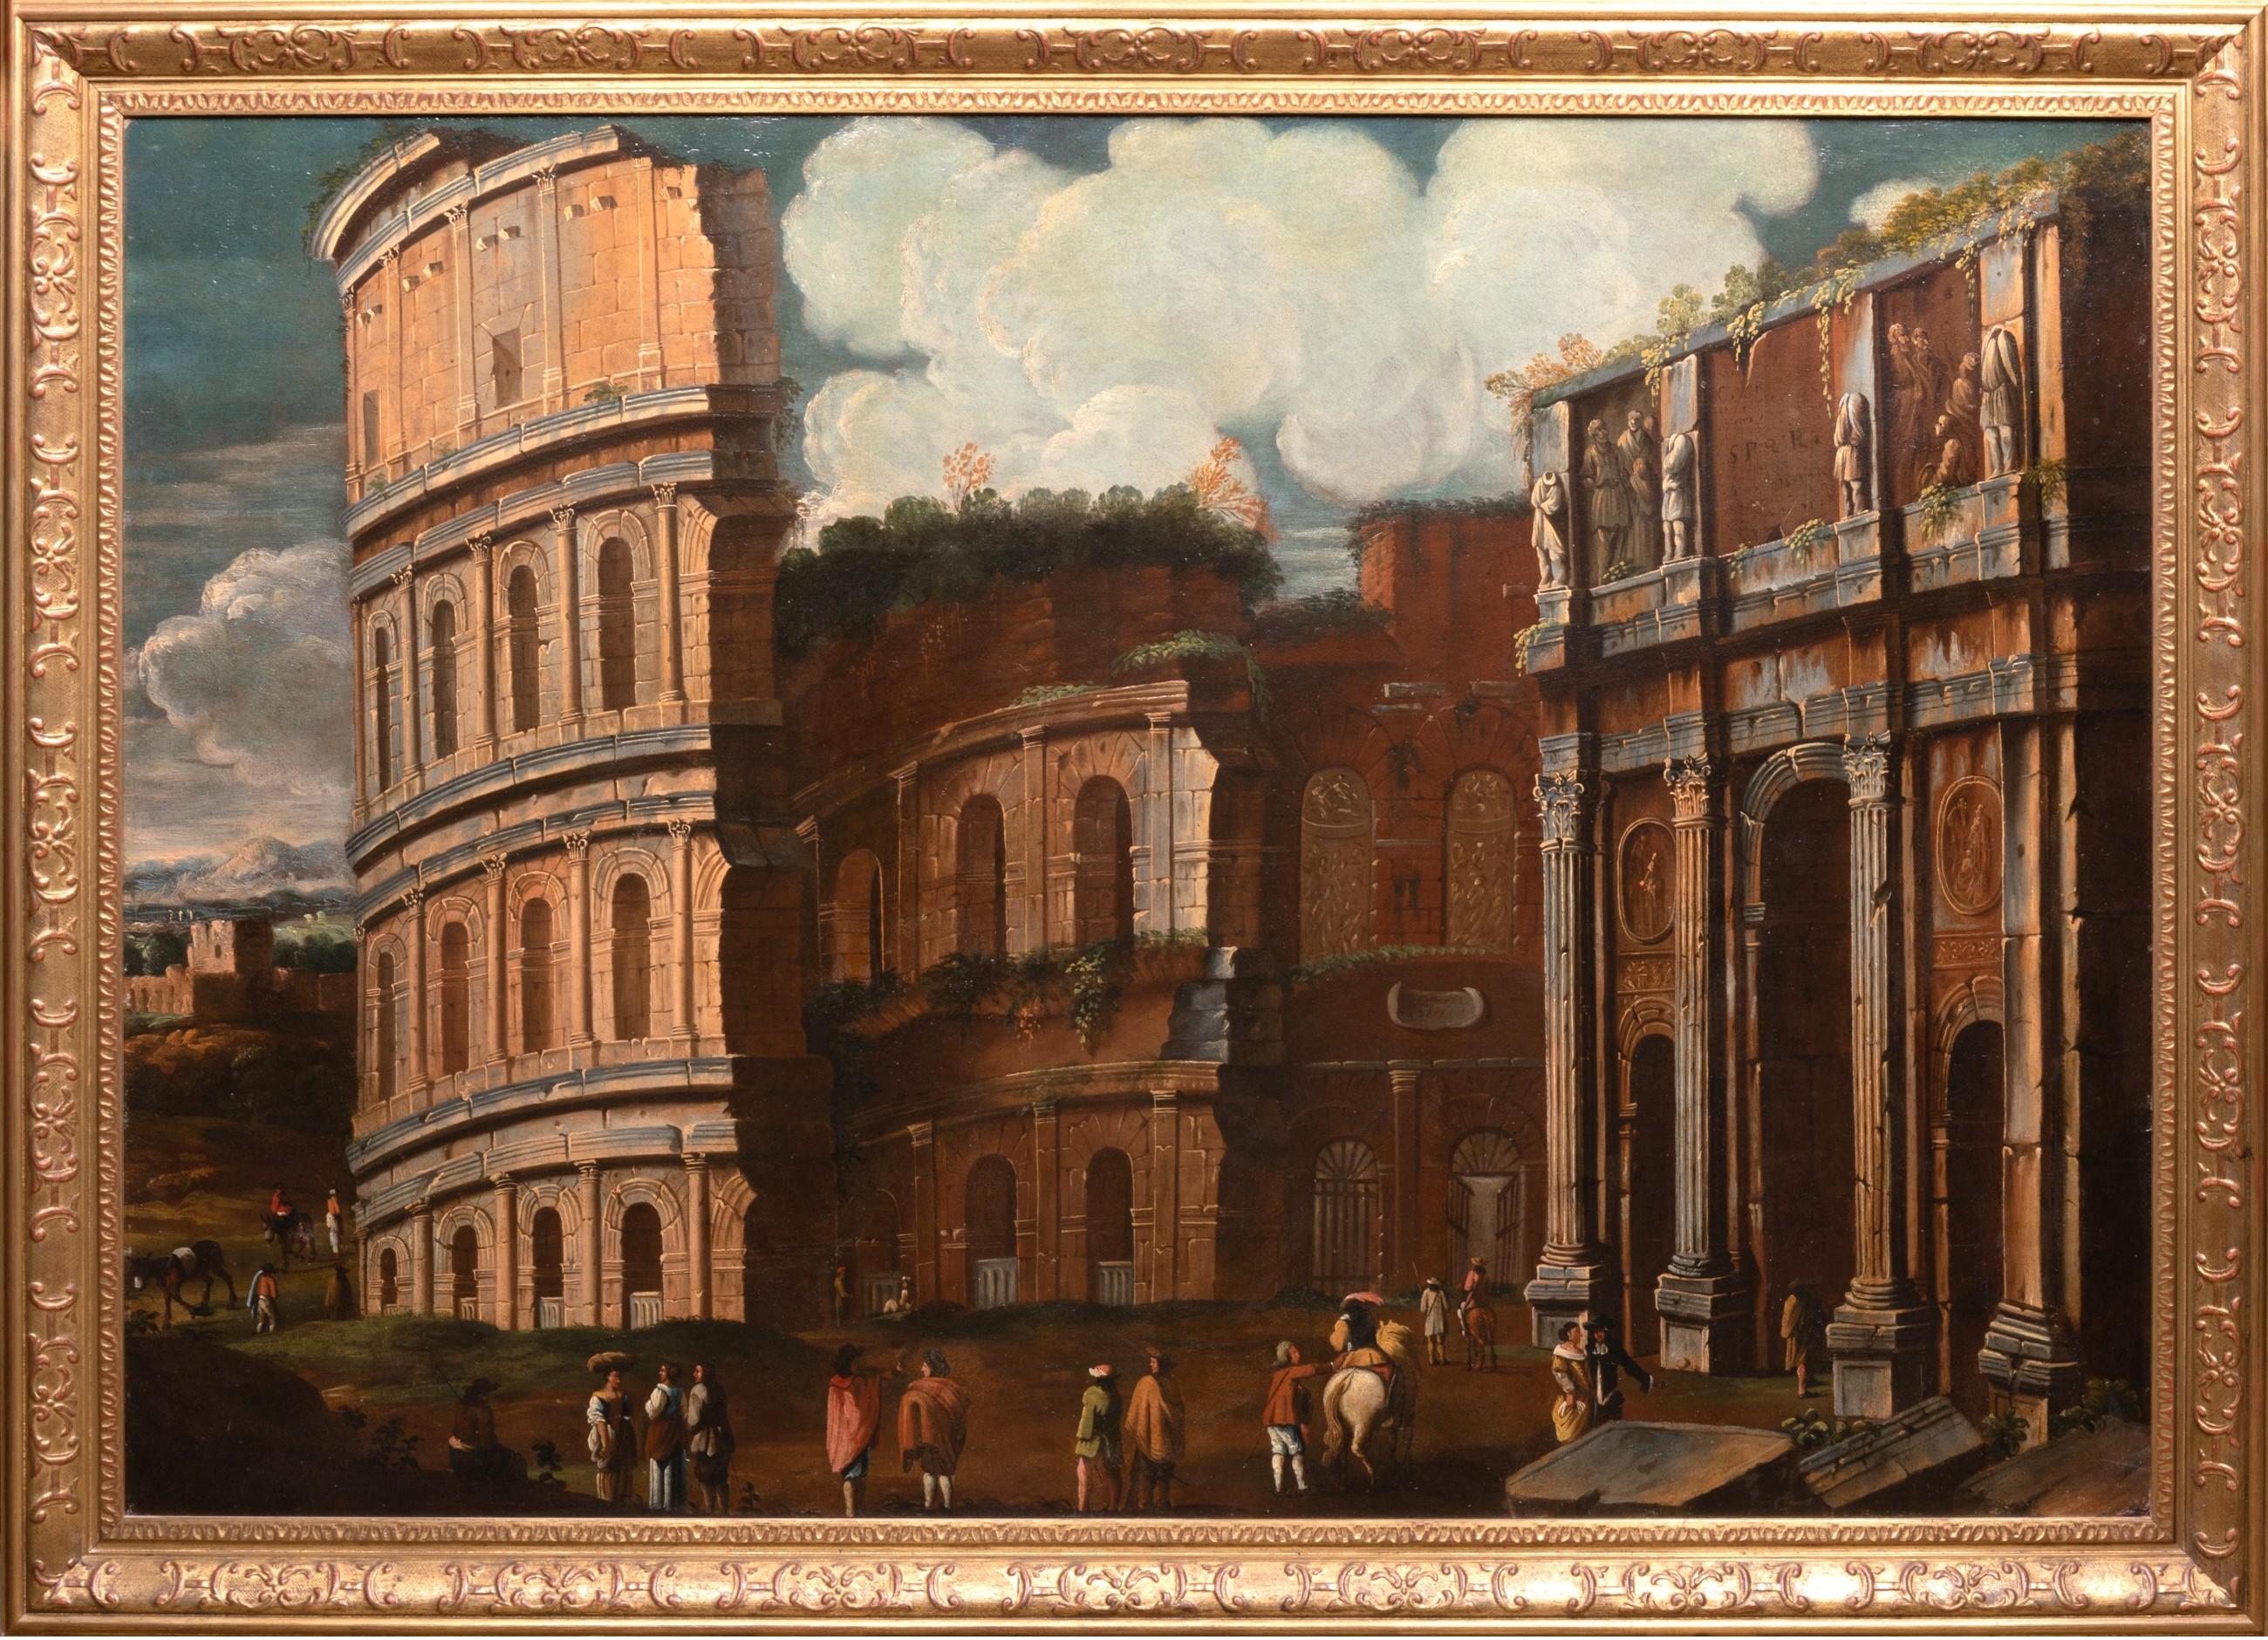 Figurative Painting Viviano Codazzi - Un bâtiment du 17e s. École italienne, Capriccio avec le Colosseum, cercle de V. Codazzi